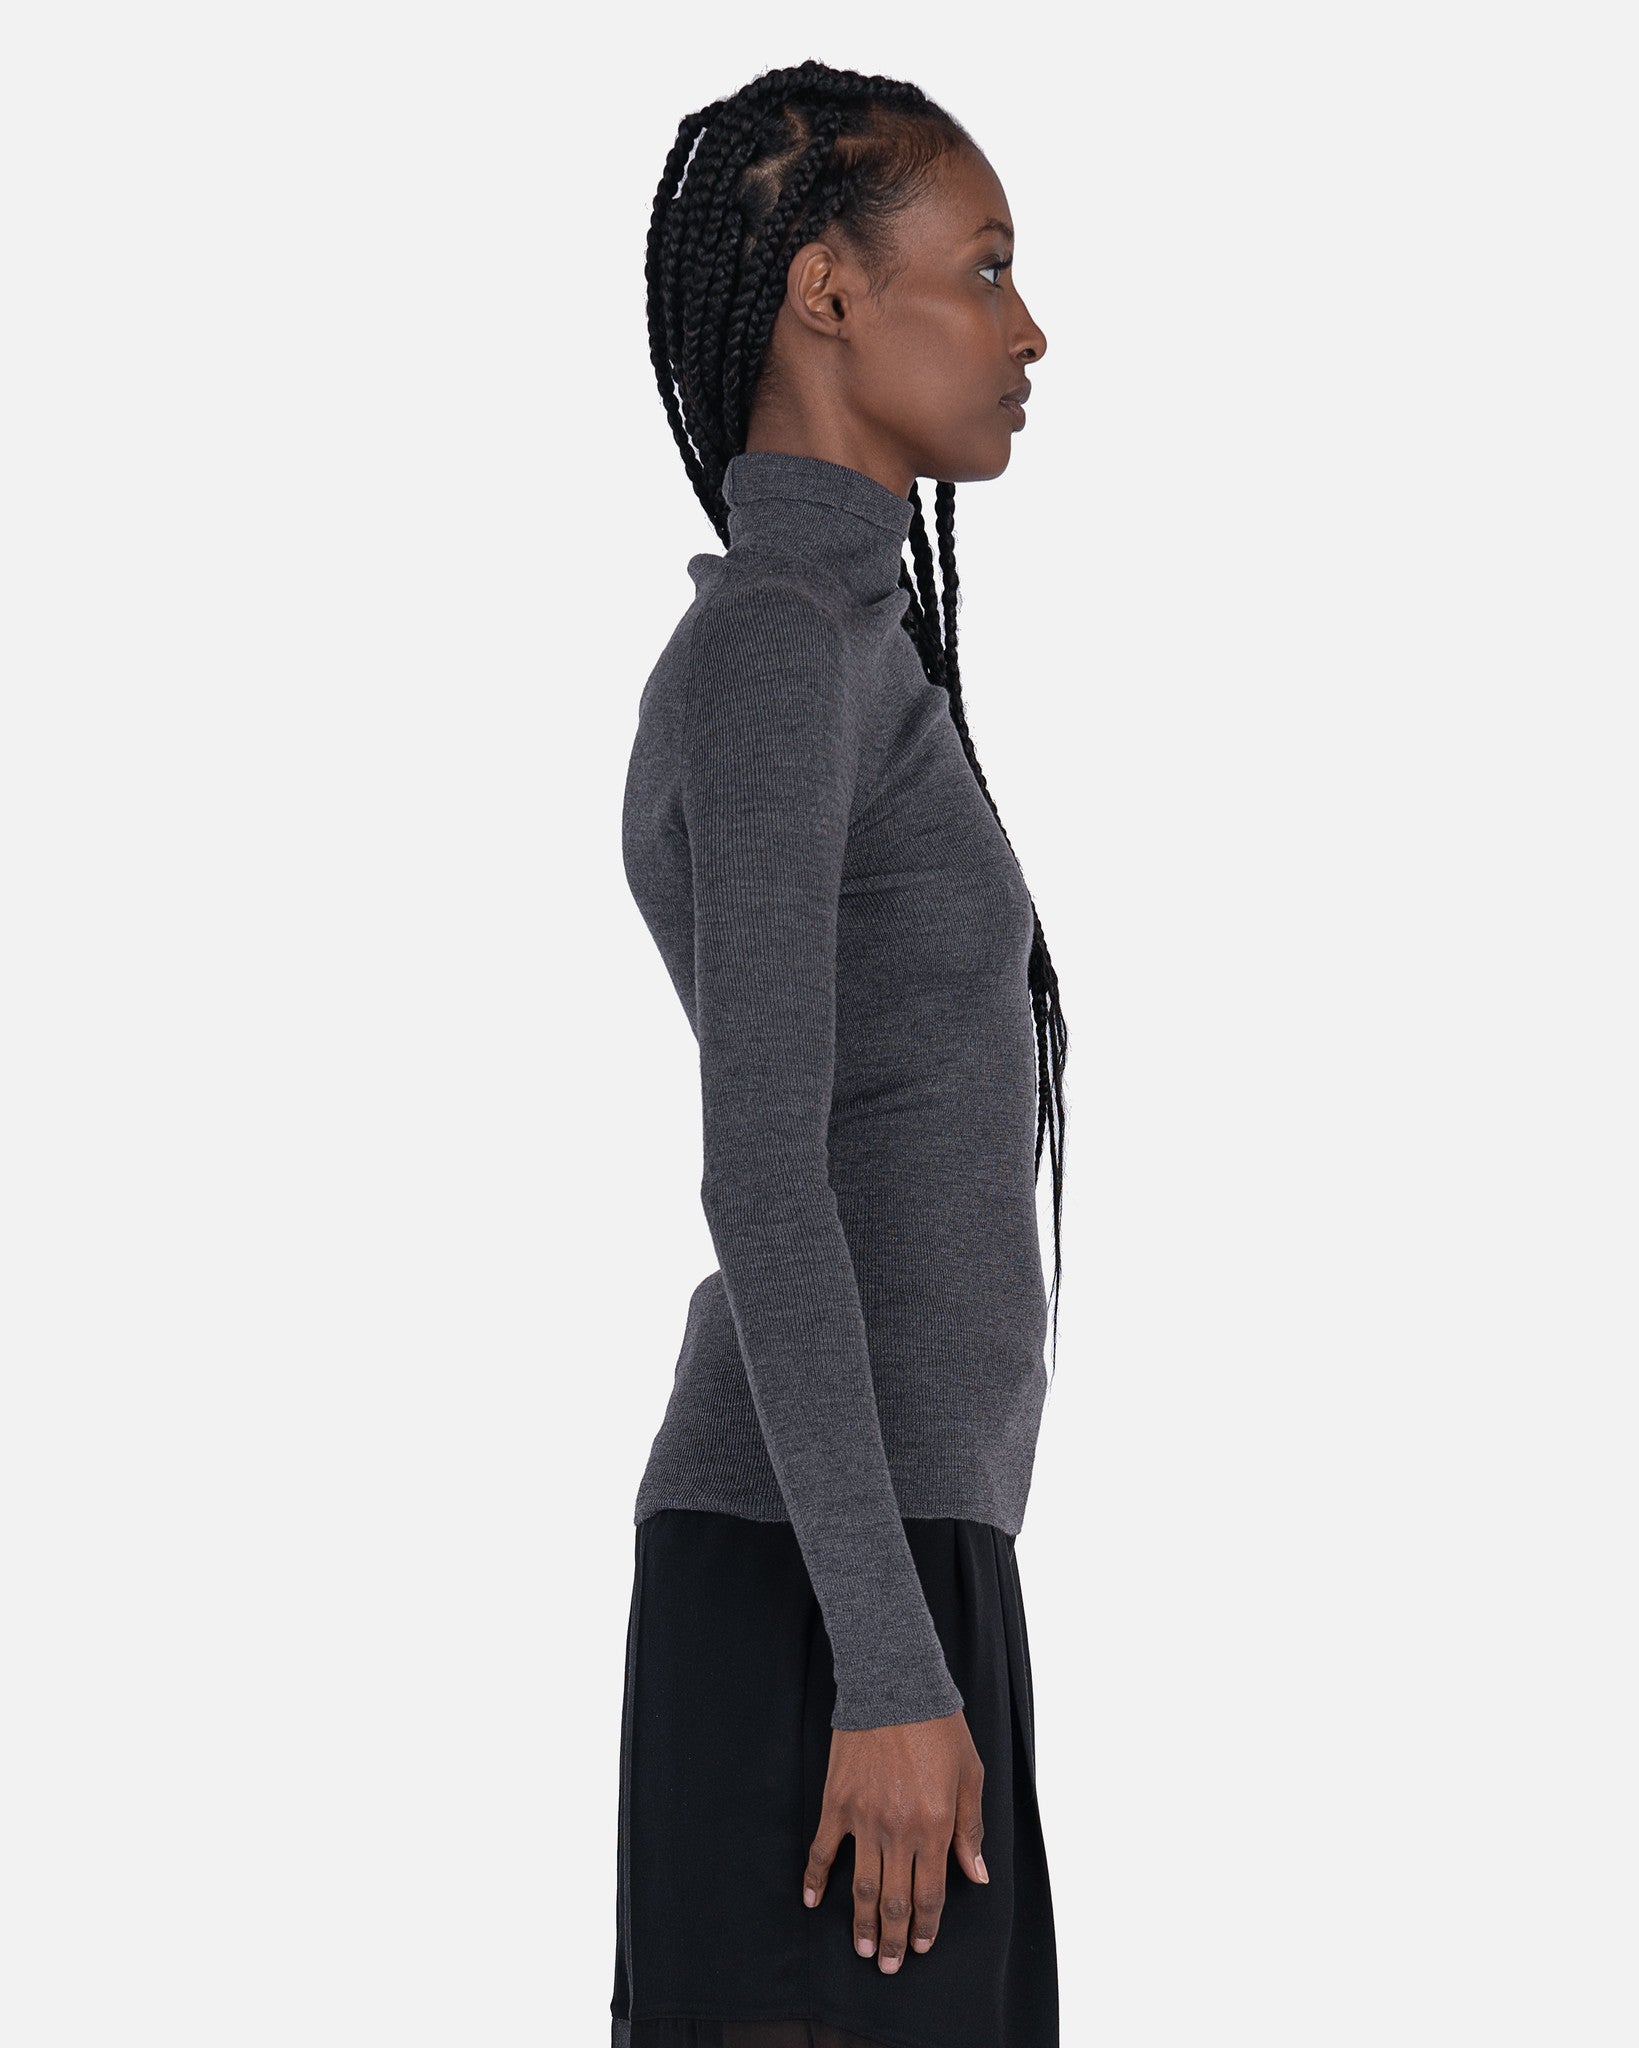 Peter Do Women Tops Combo Sleeve Turtle Neck Sweater in Cool Grey/Light Grey